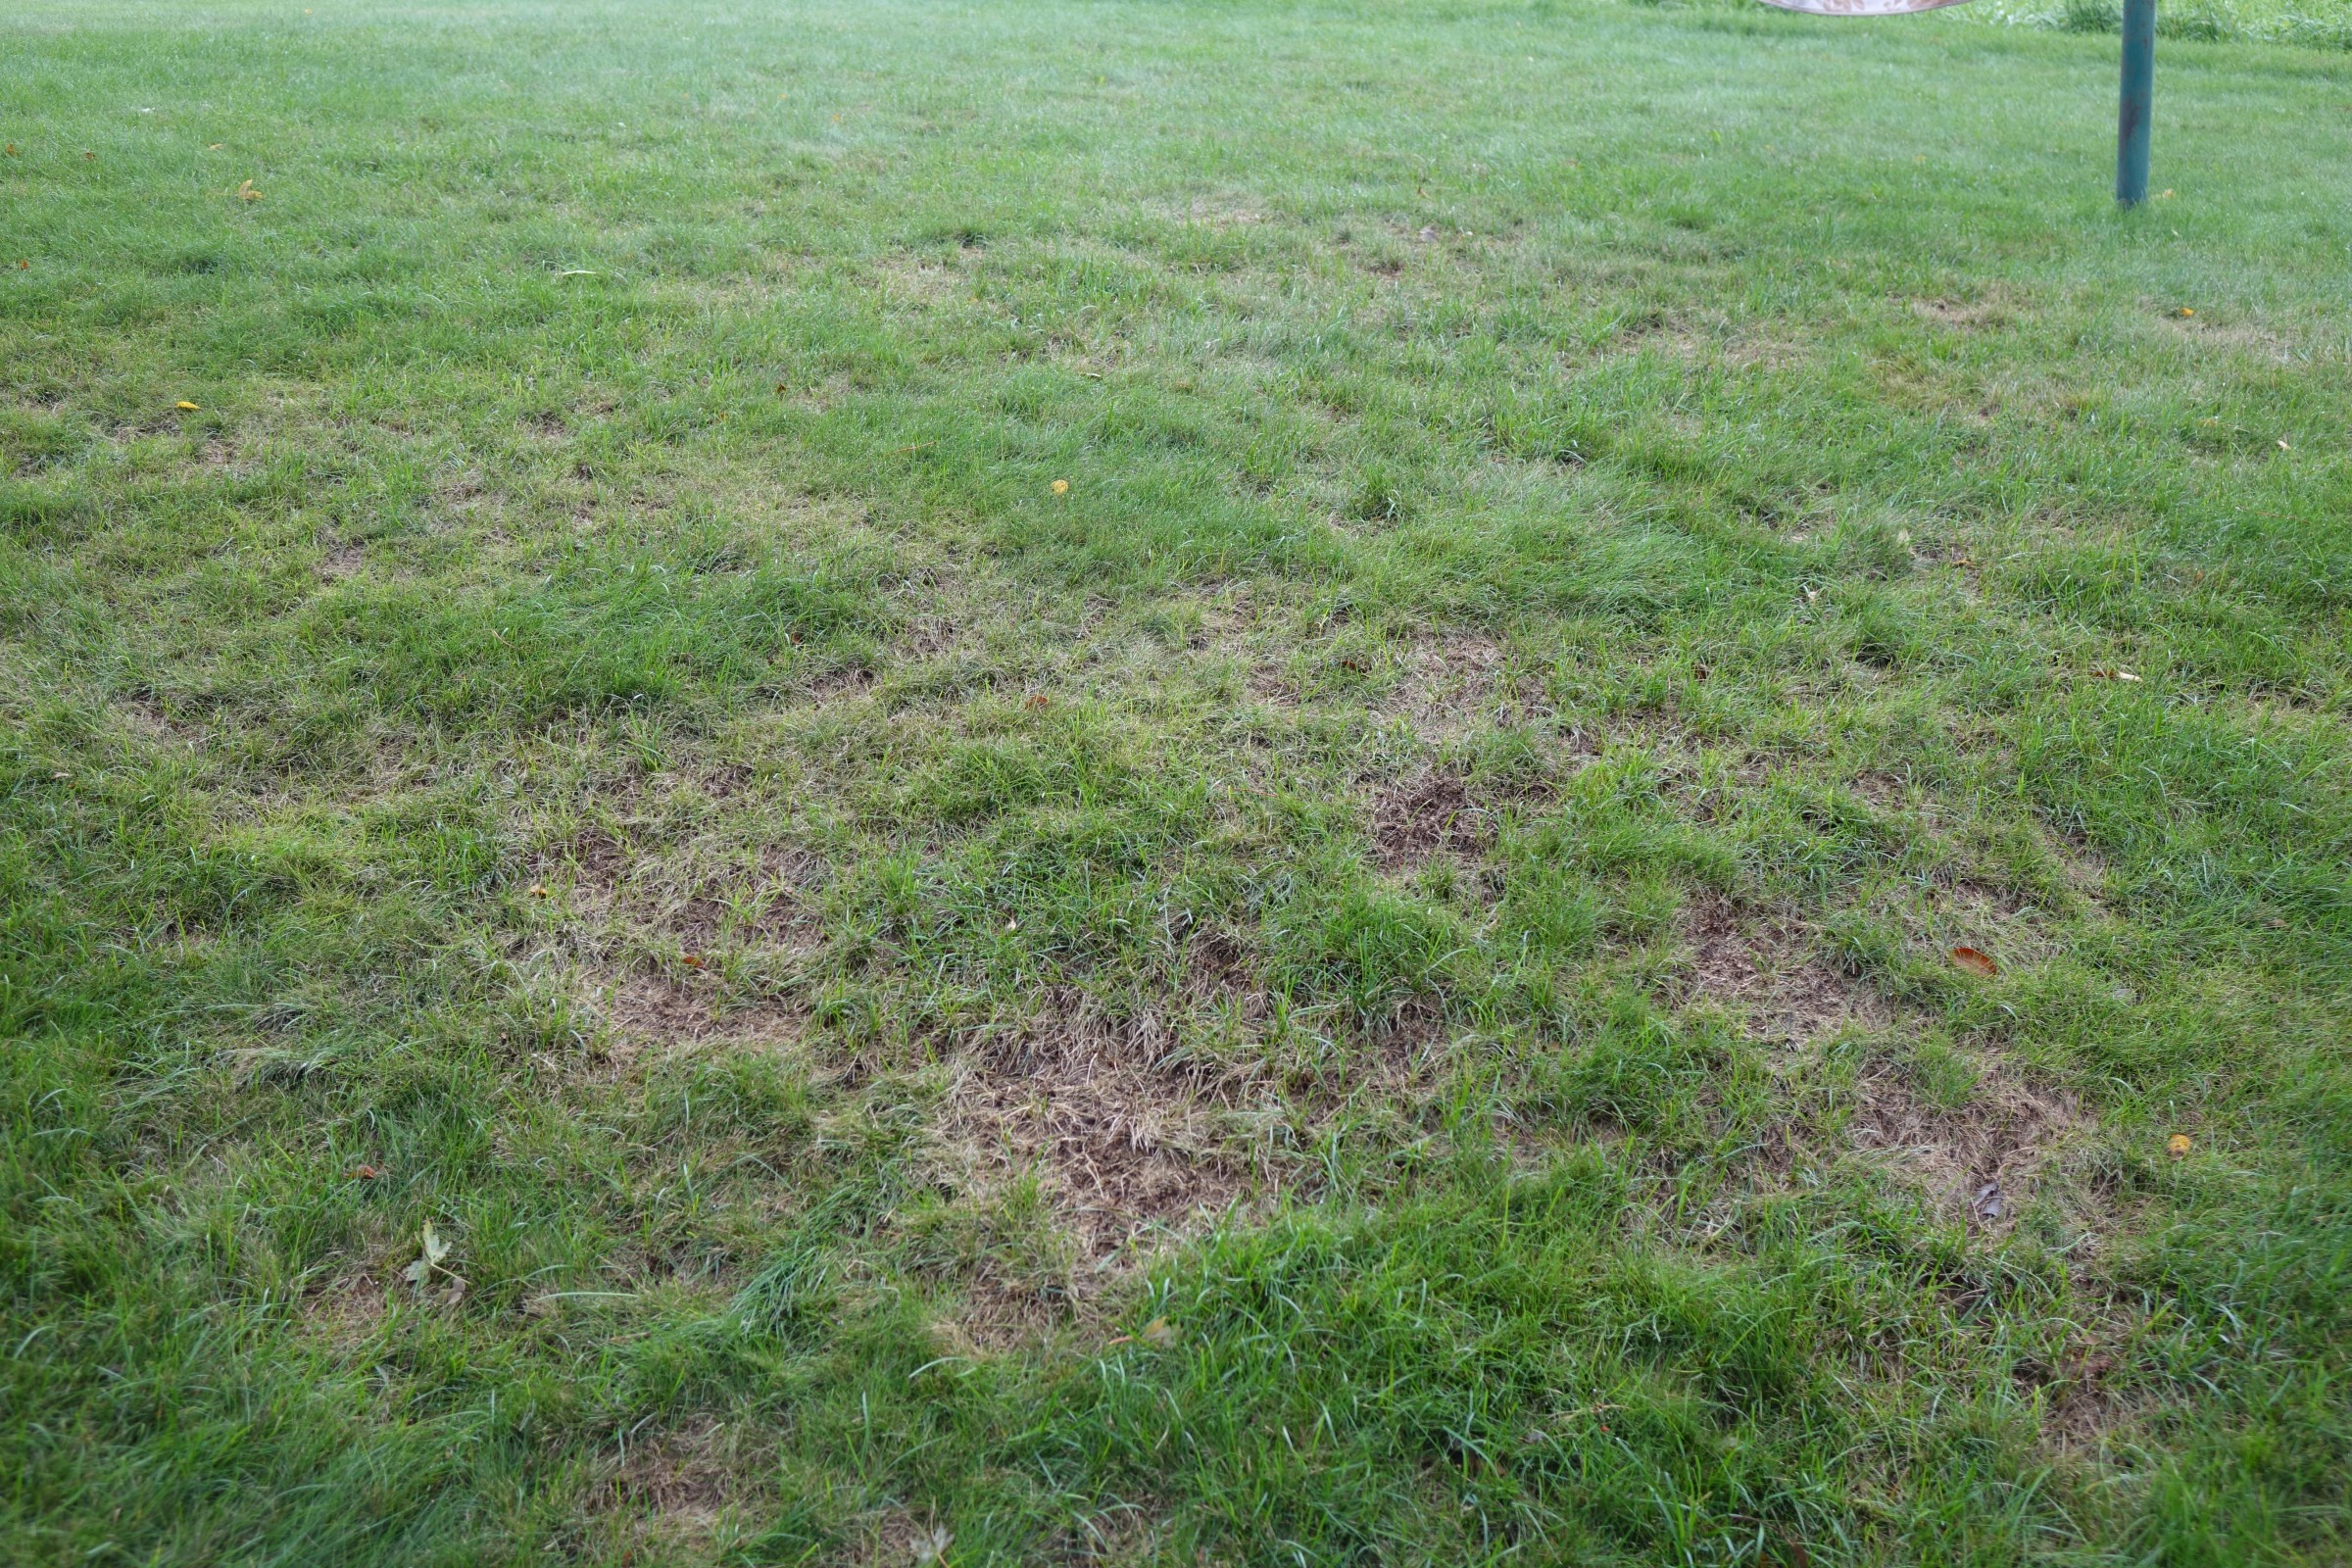 Bare Spots in Lawn – PlantDOC